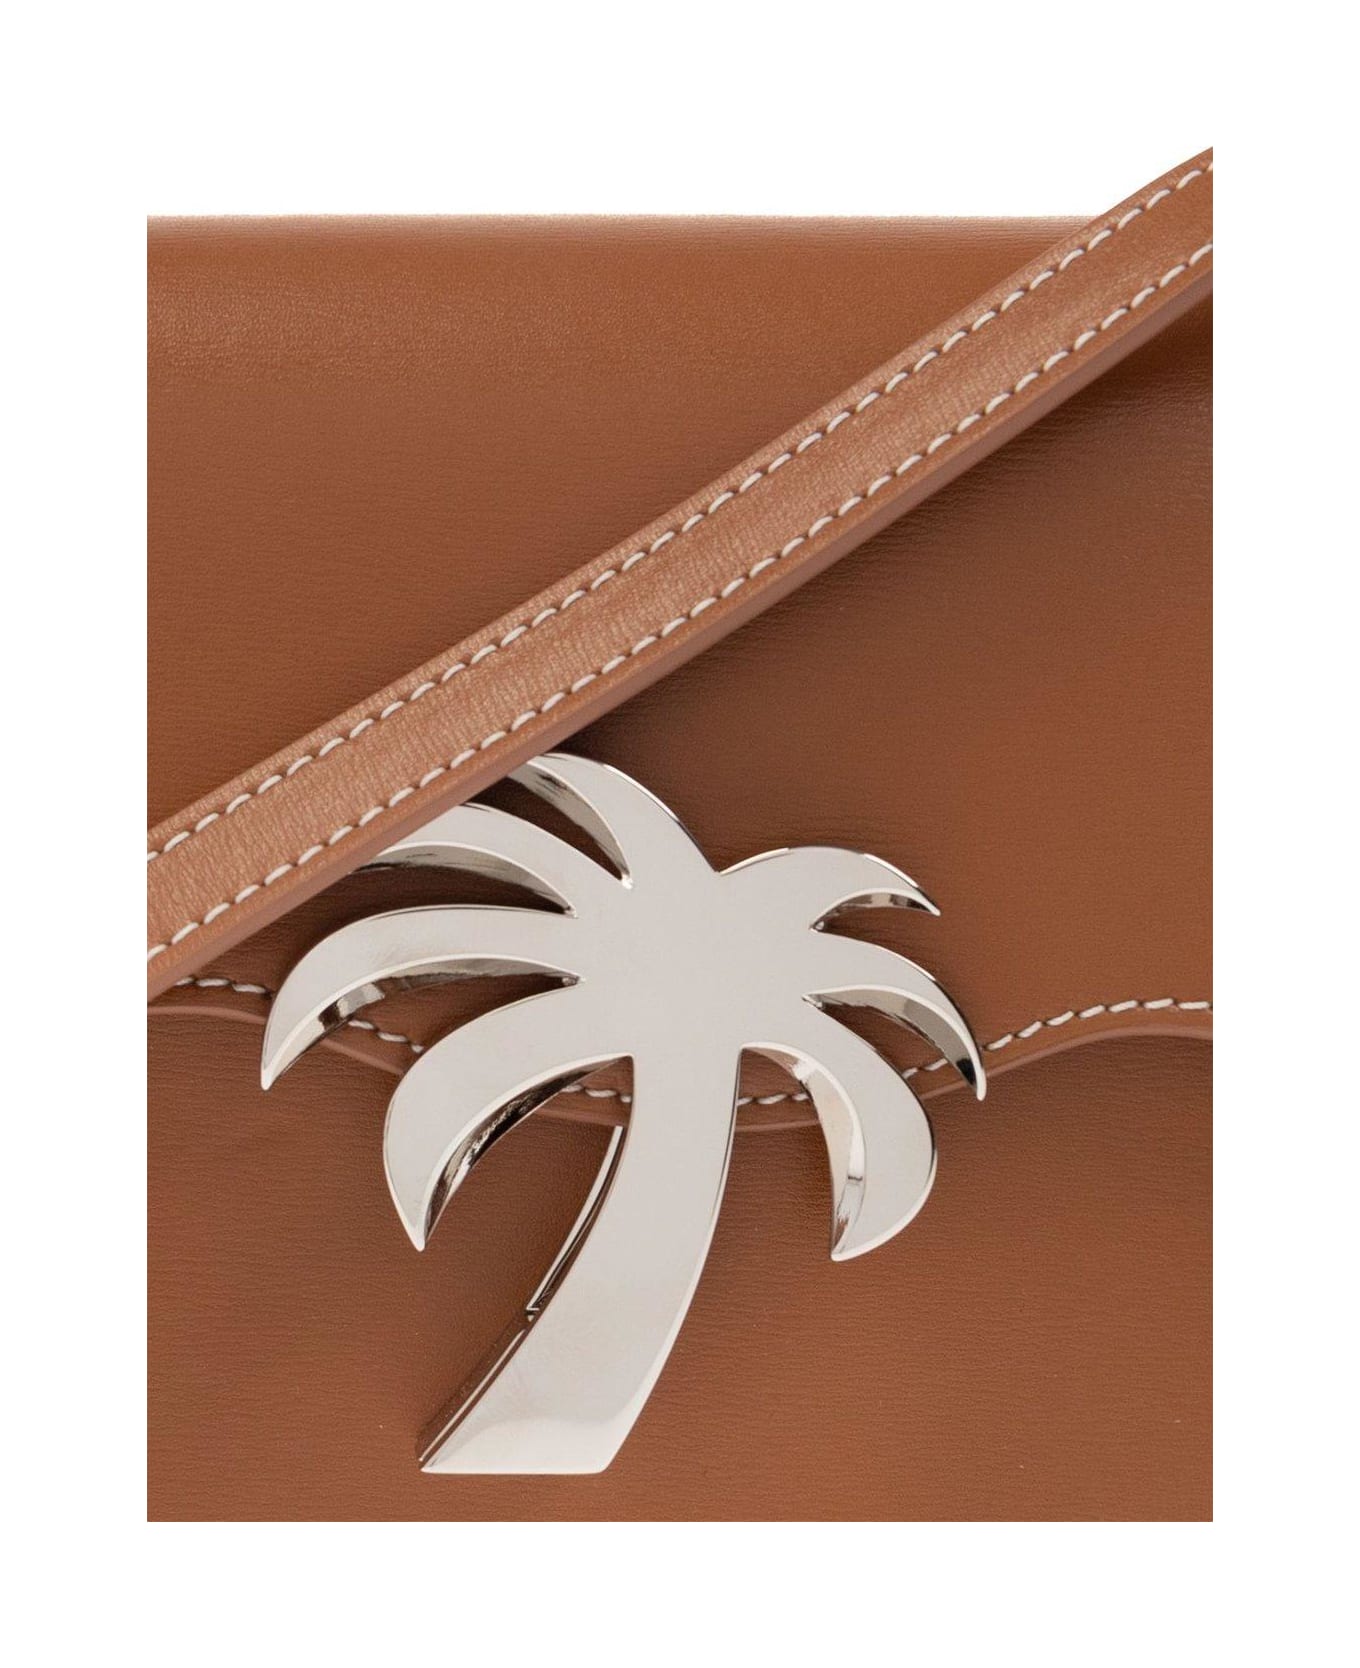 Palm Angels Palm Plaque Small Shoulder Bag - Brown